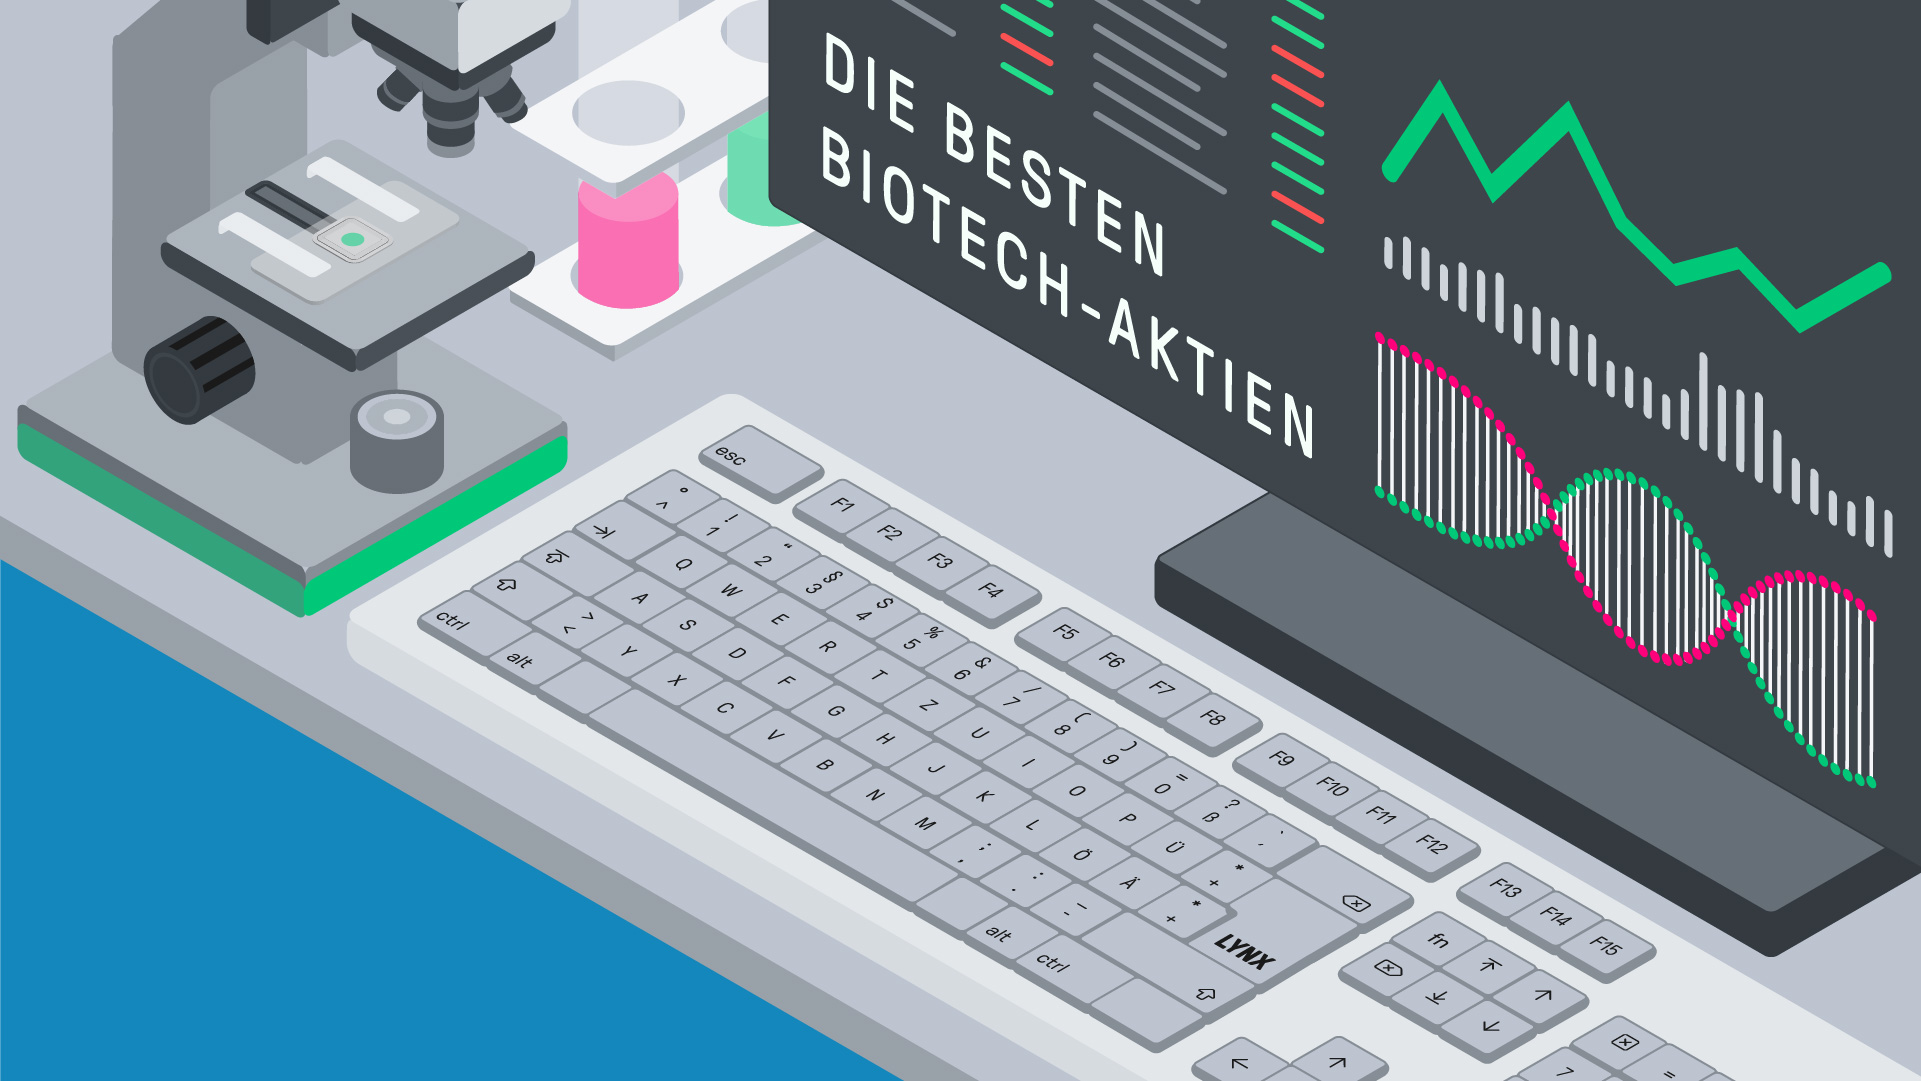 Die besten Biotech Aktien | Online Broker LYNX